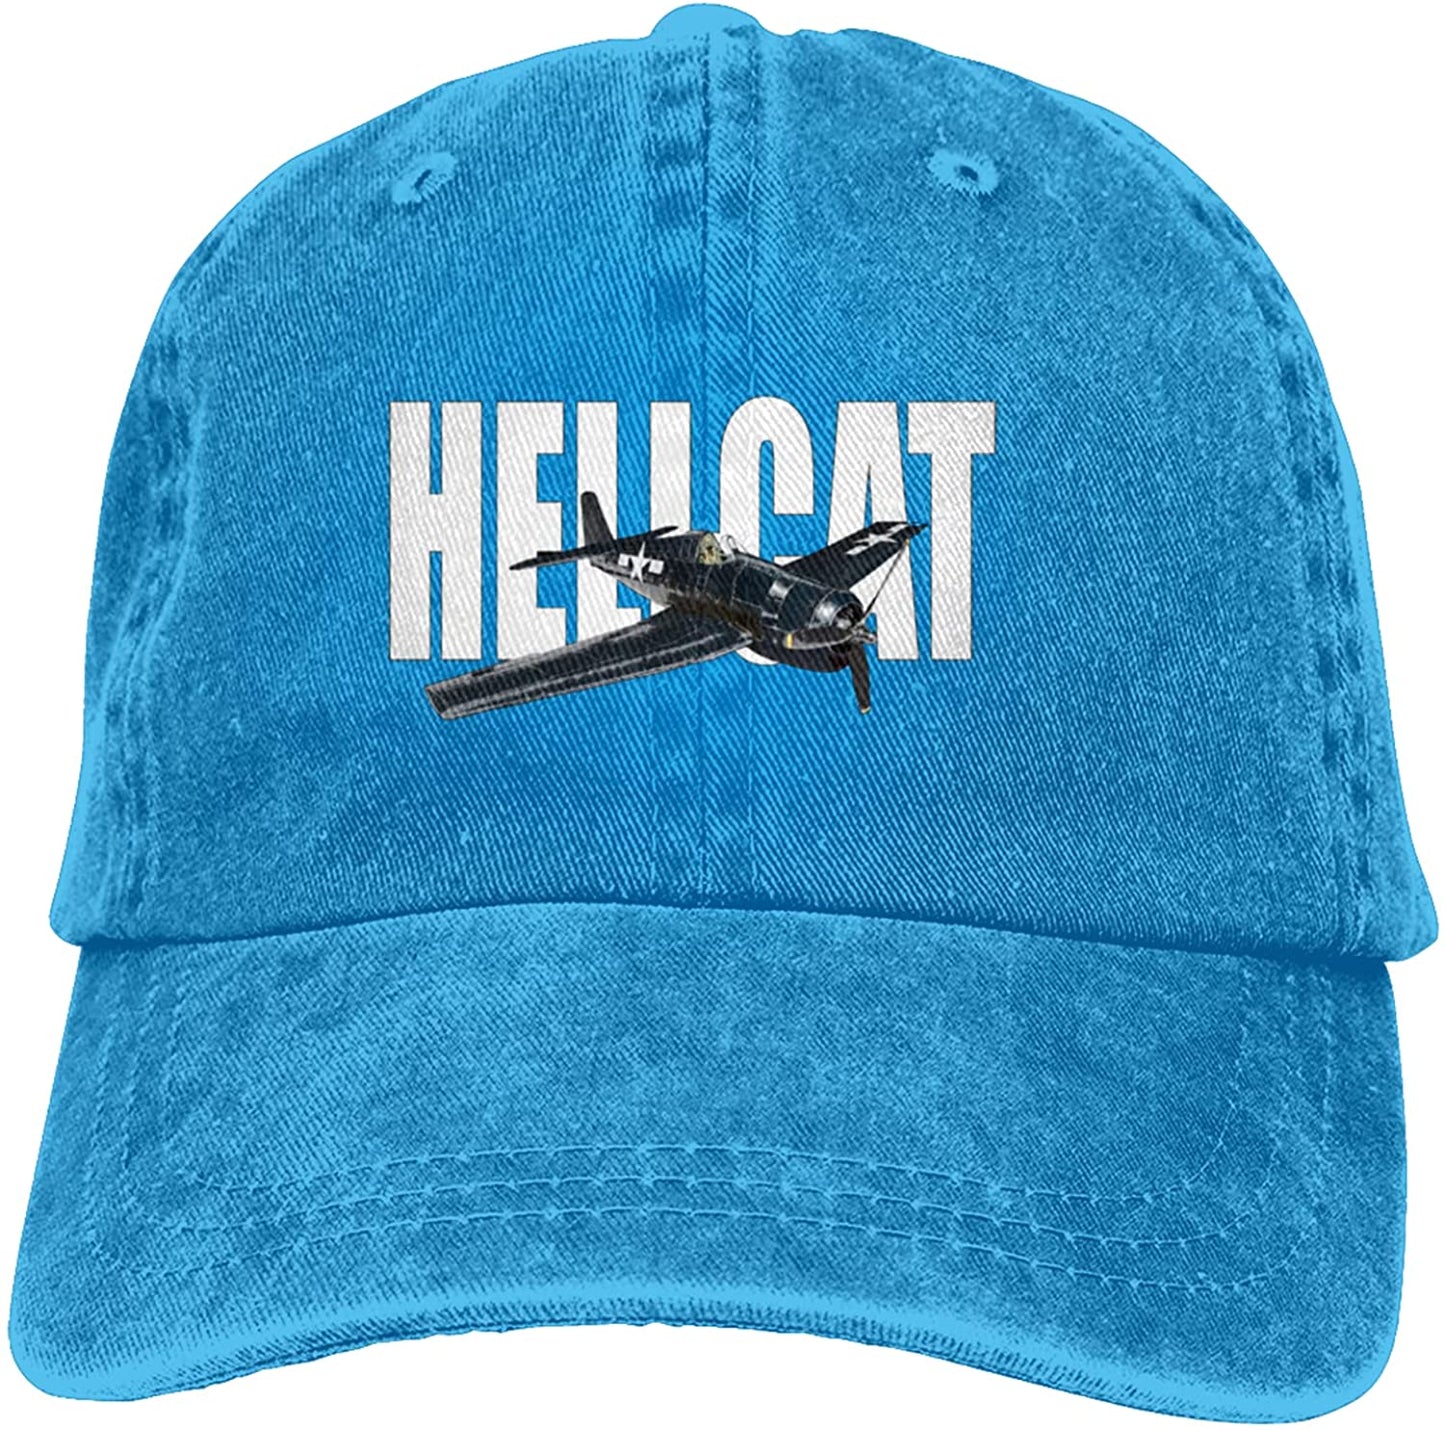 Best Selling 2020 ZADPBB F6F Hellcat US Navy WW2 WWII Fighter Plane Denim Hats Adjustable Trucker Baseball Hat for Adult Black